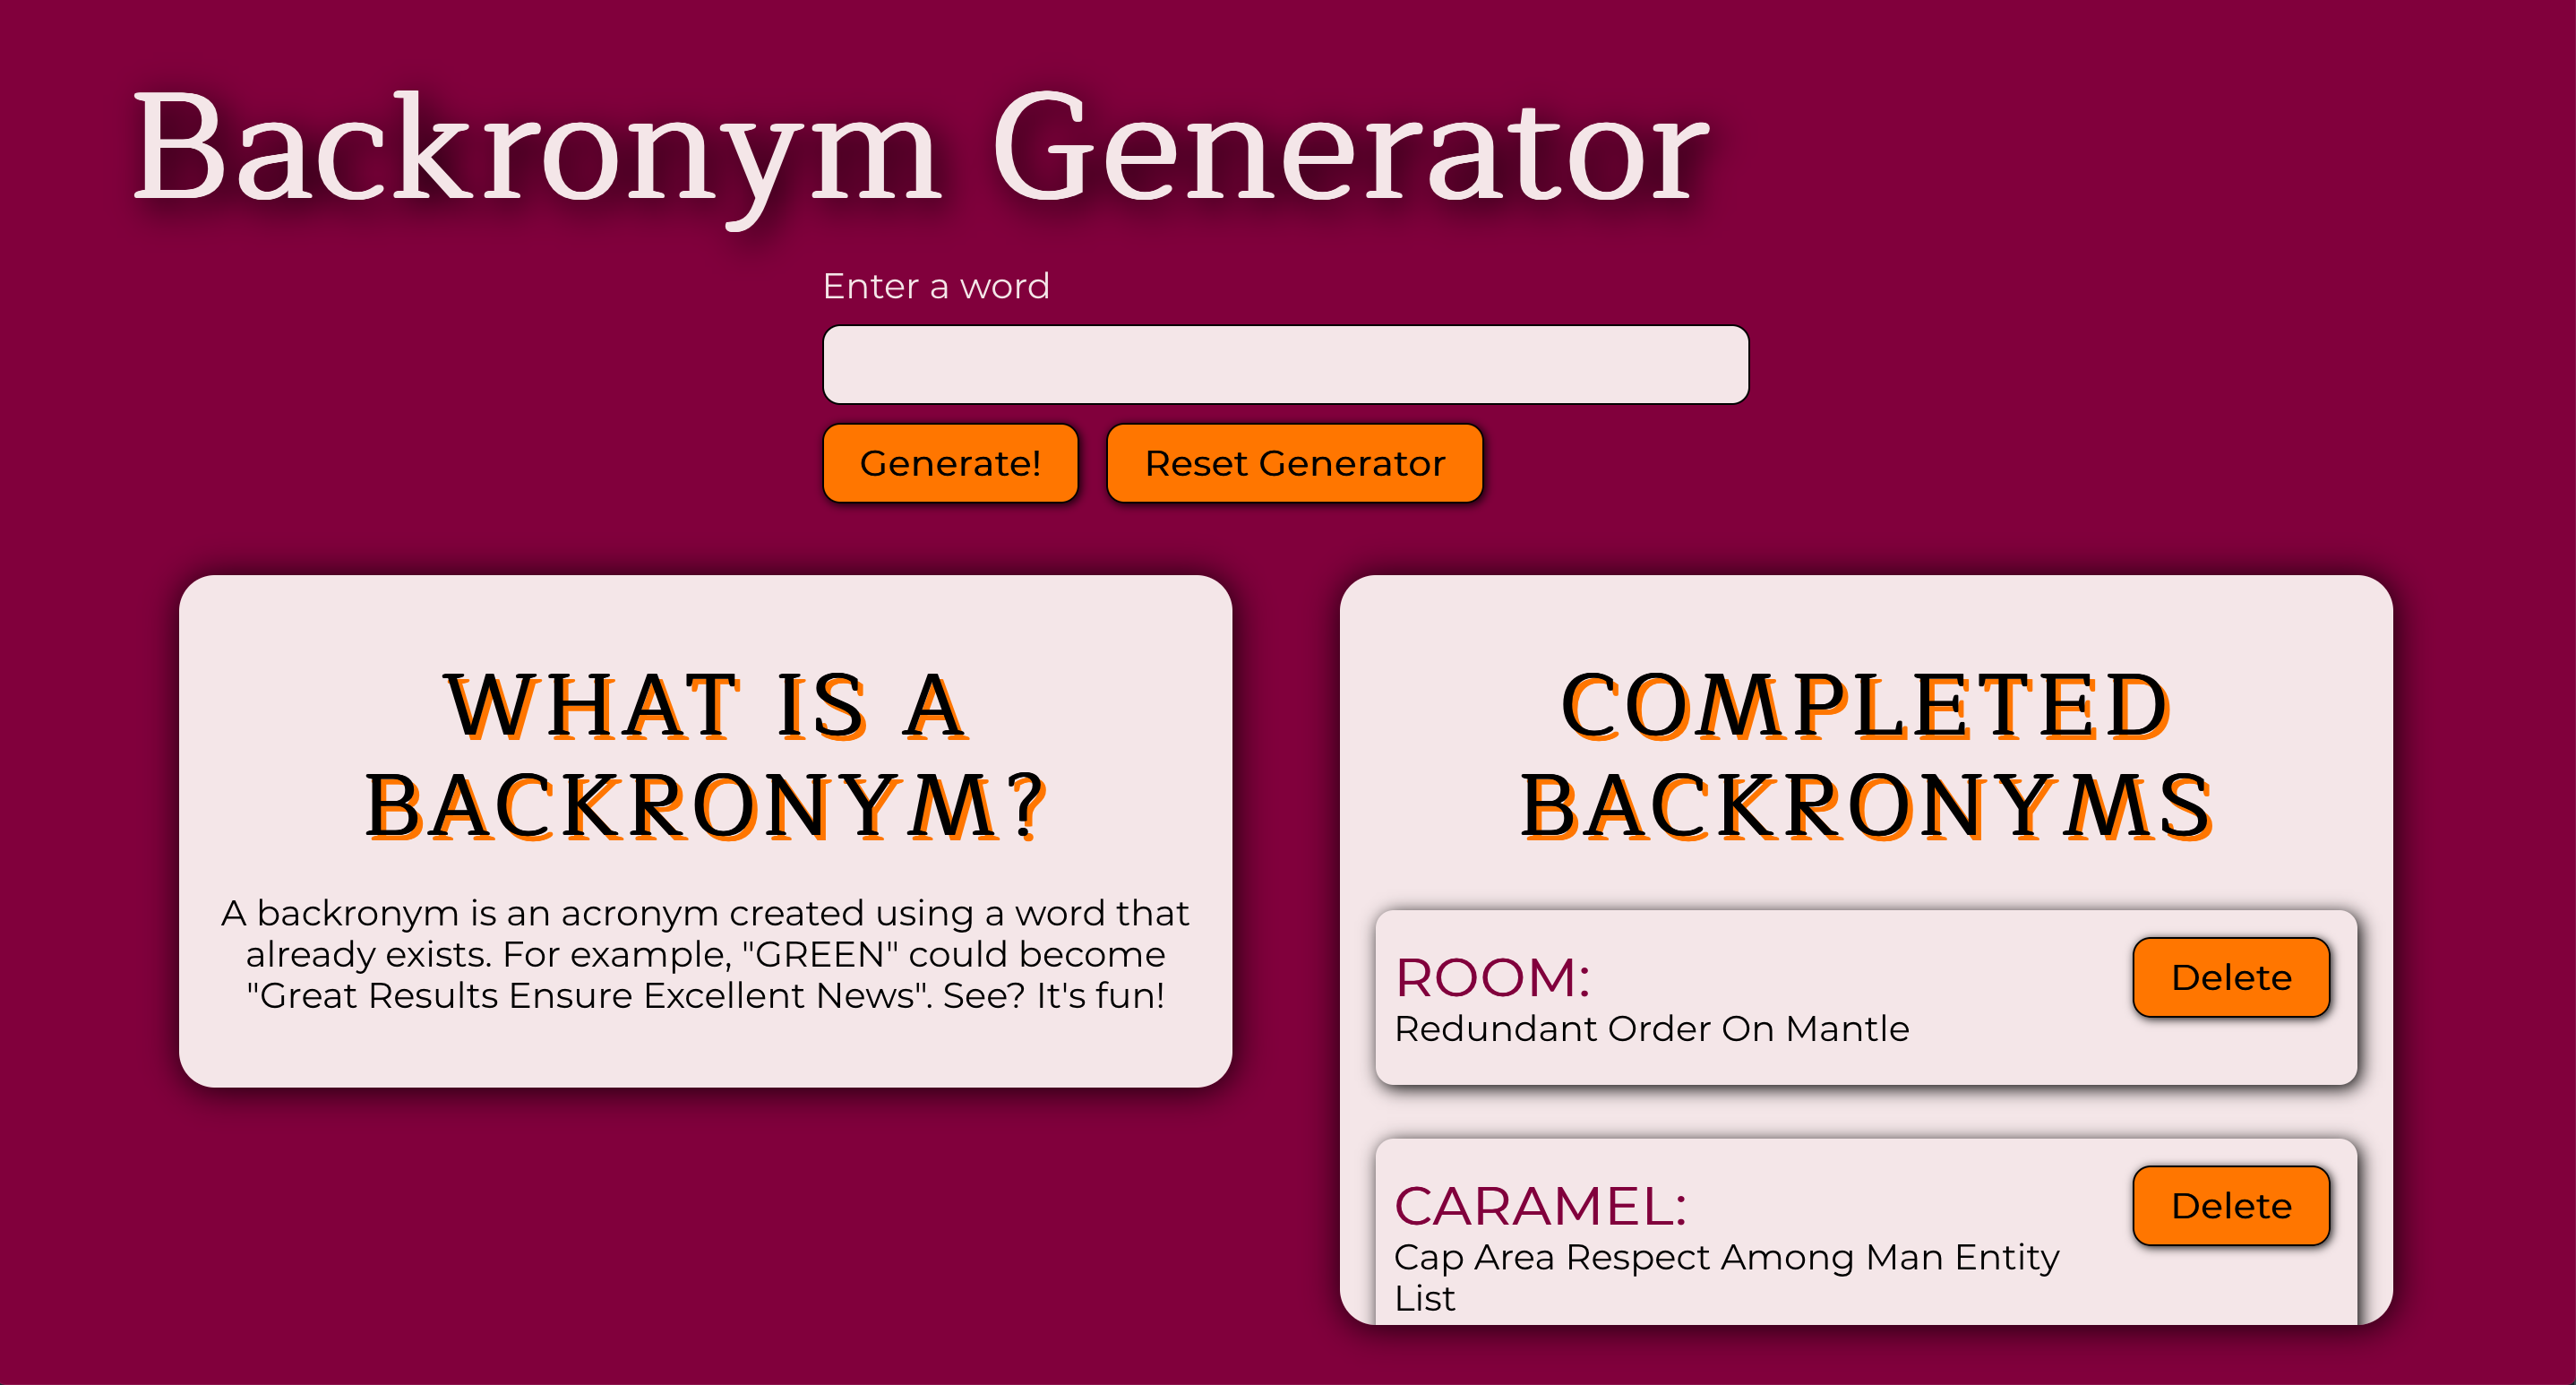 homepage for backronym 
              Generator